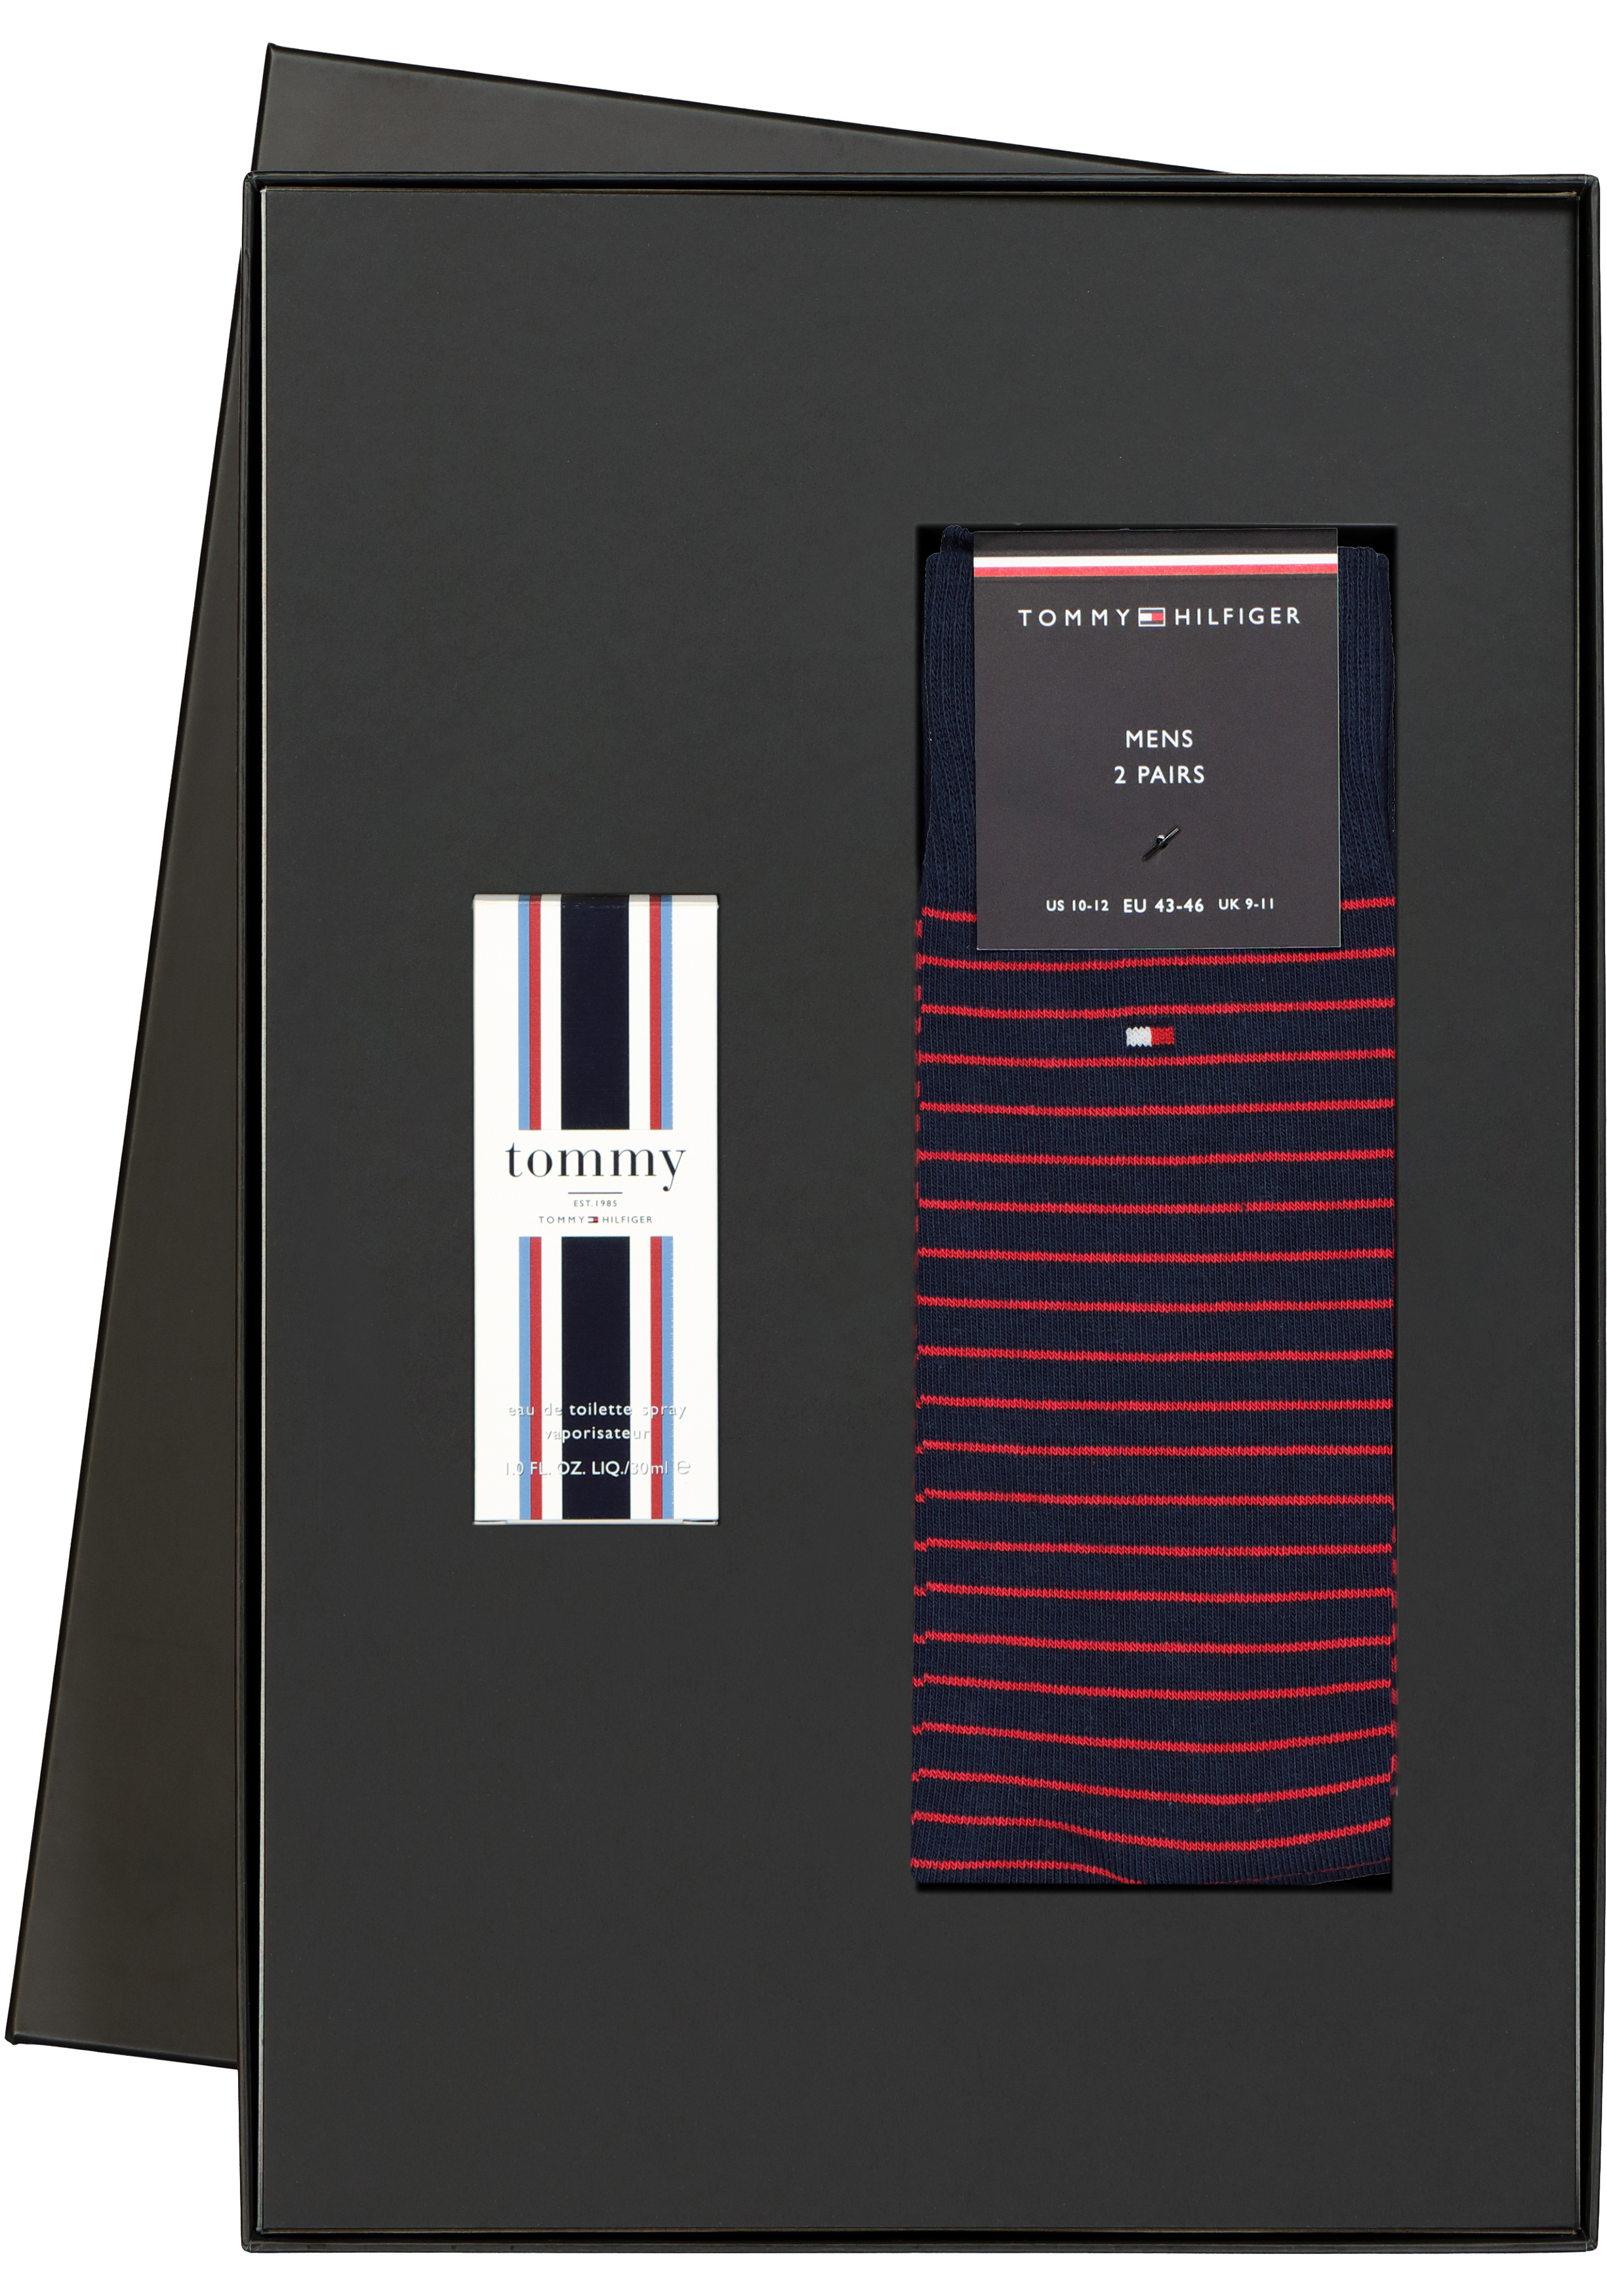 Stevig Acht Christian Heren cadeaubox: Tommy Hilfiger parfum + 2-pack Tommy Hilfiger sokken -  Shop de nieuwste voorjaarsmode